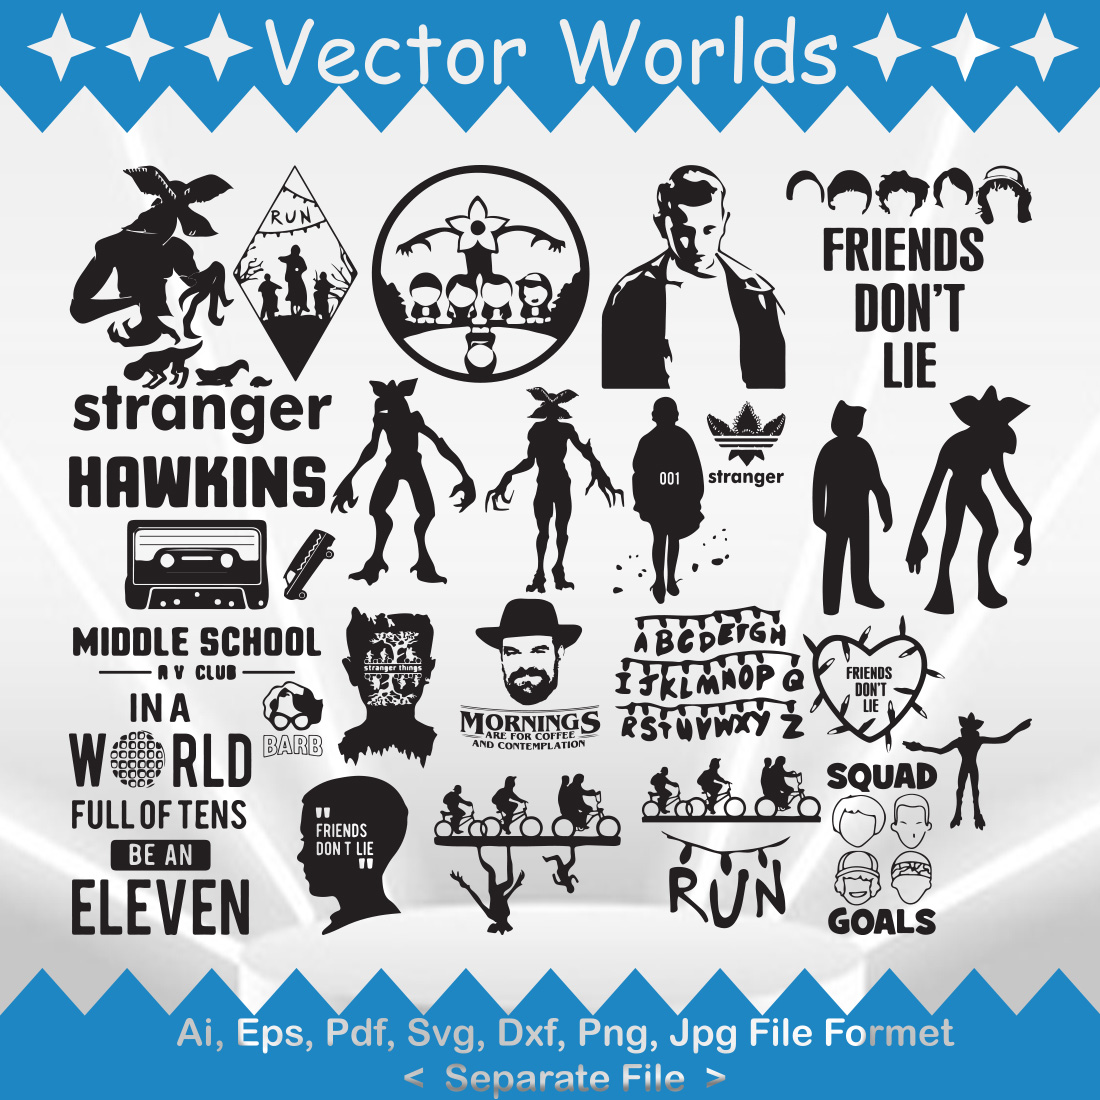 Stranger Things SVG Vector Design cover image.